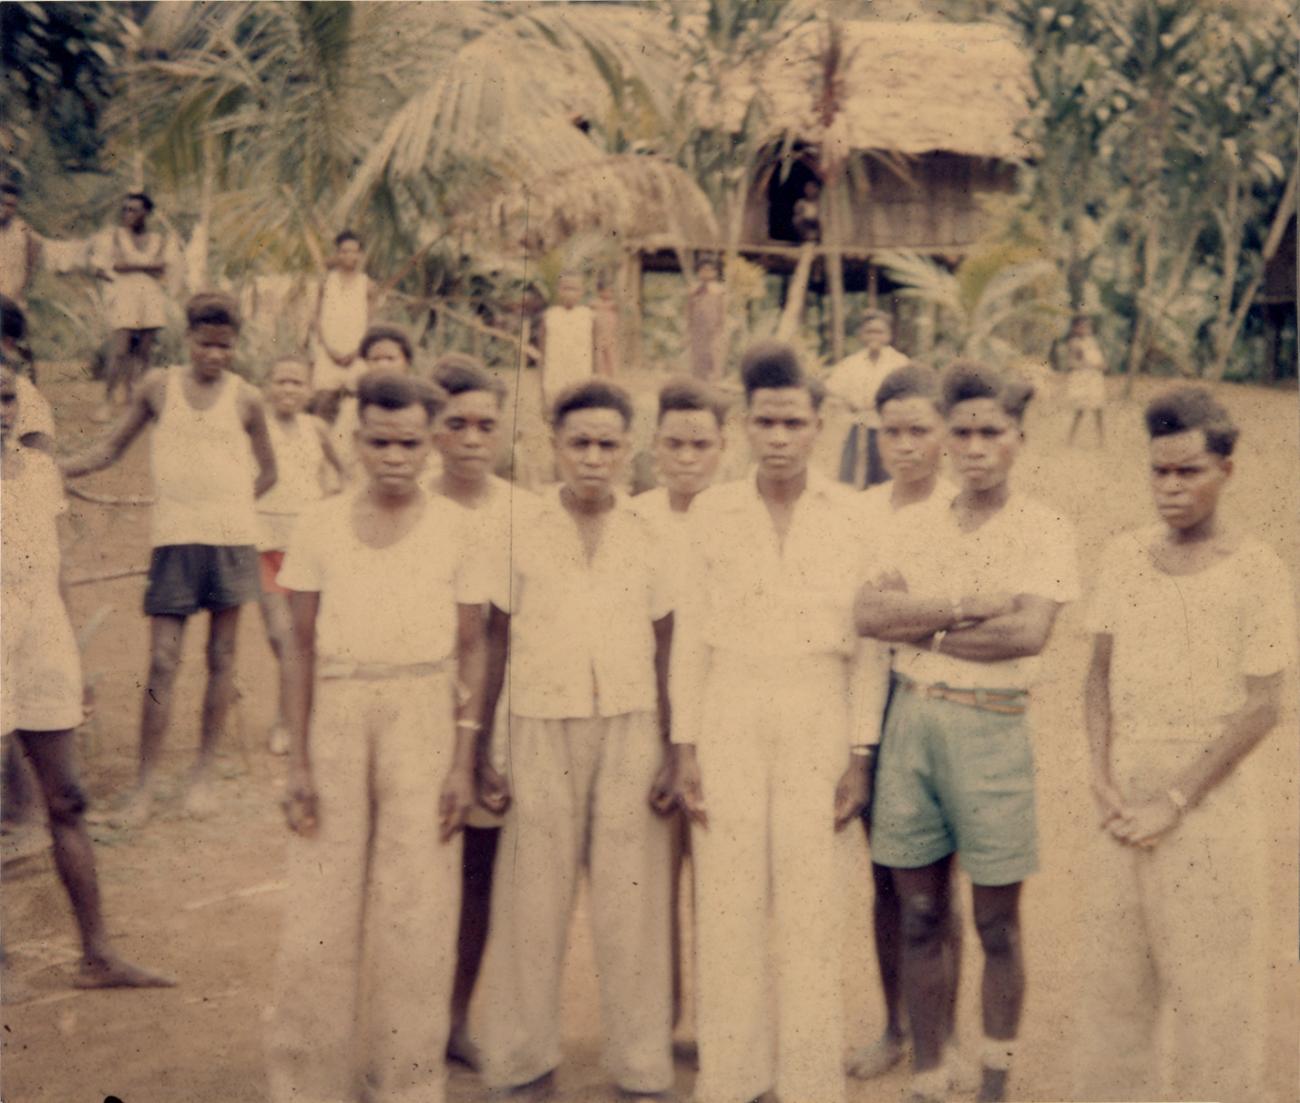 BD/309/37 - 
Dorp Sosenek, groepsfoto van jonge mannen met op achtergrond paalwoning
